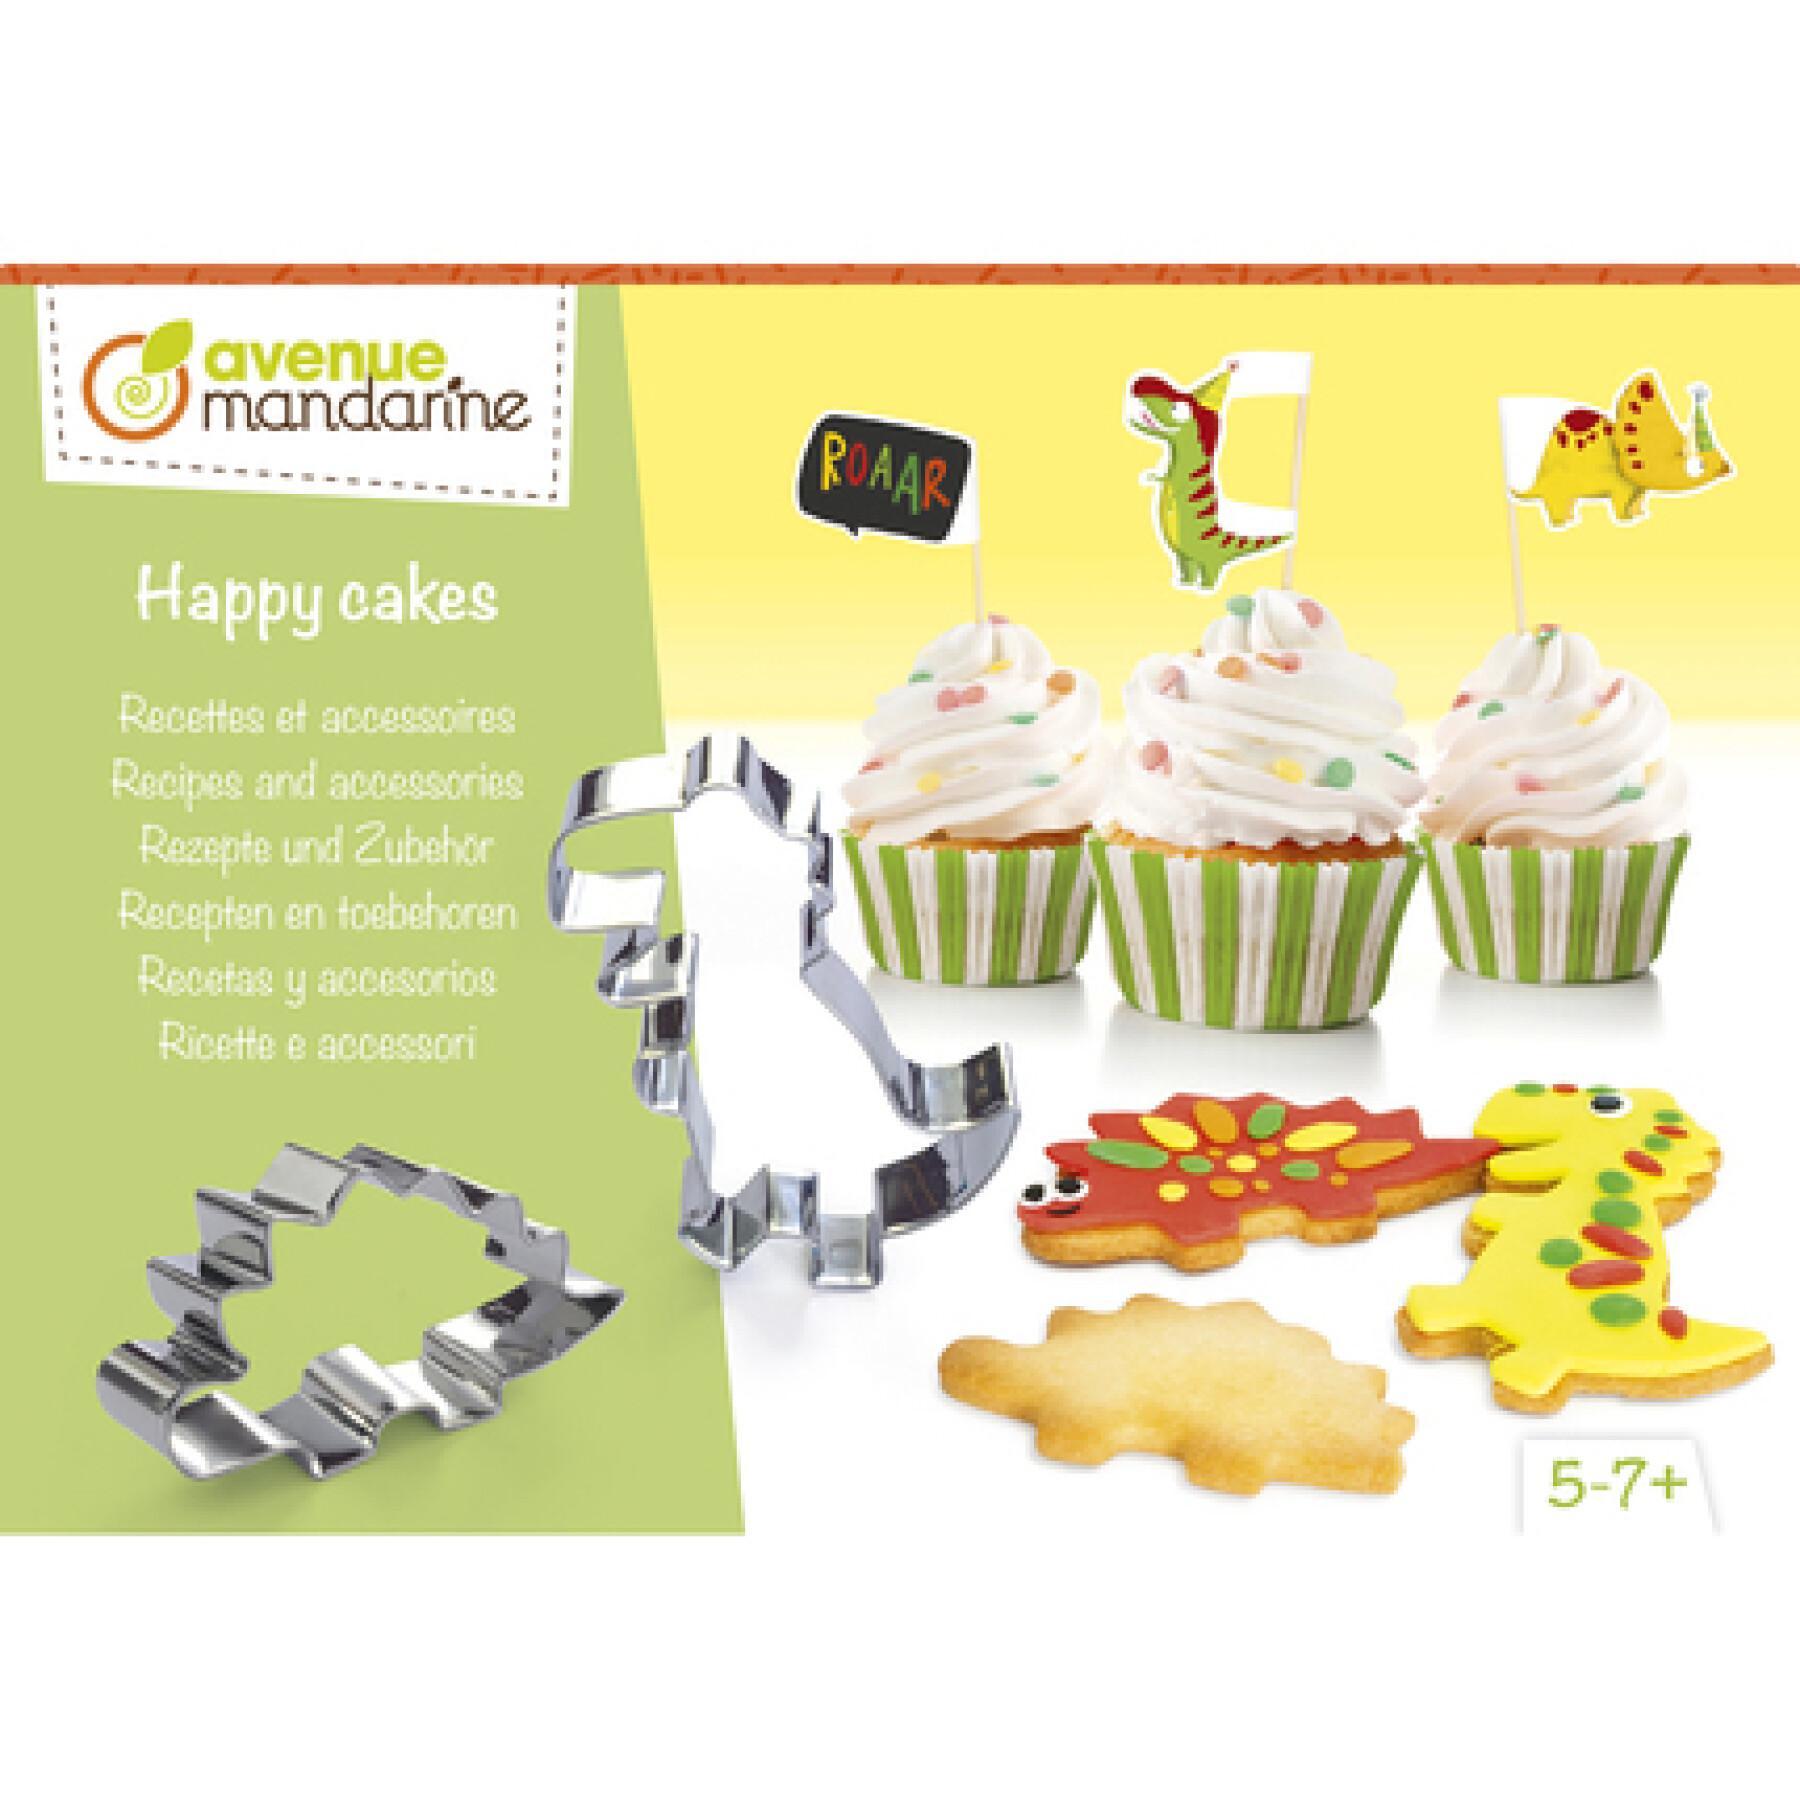 Creatieve receptendoos en accessoire happy cakes dinosaurussen Avenue Mandarine